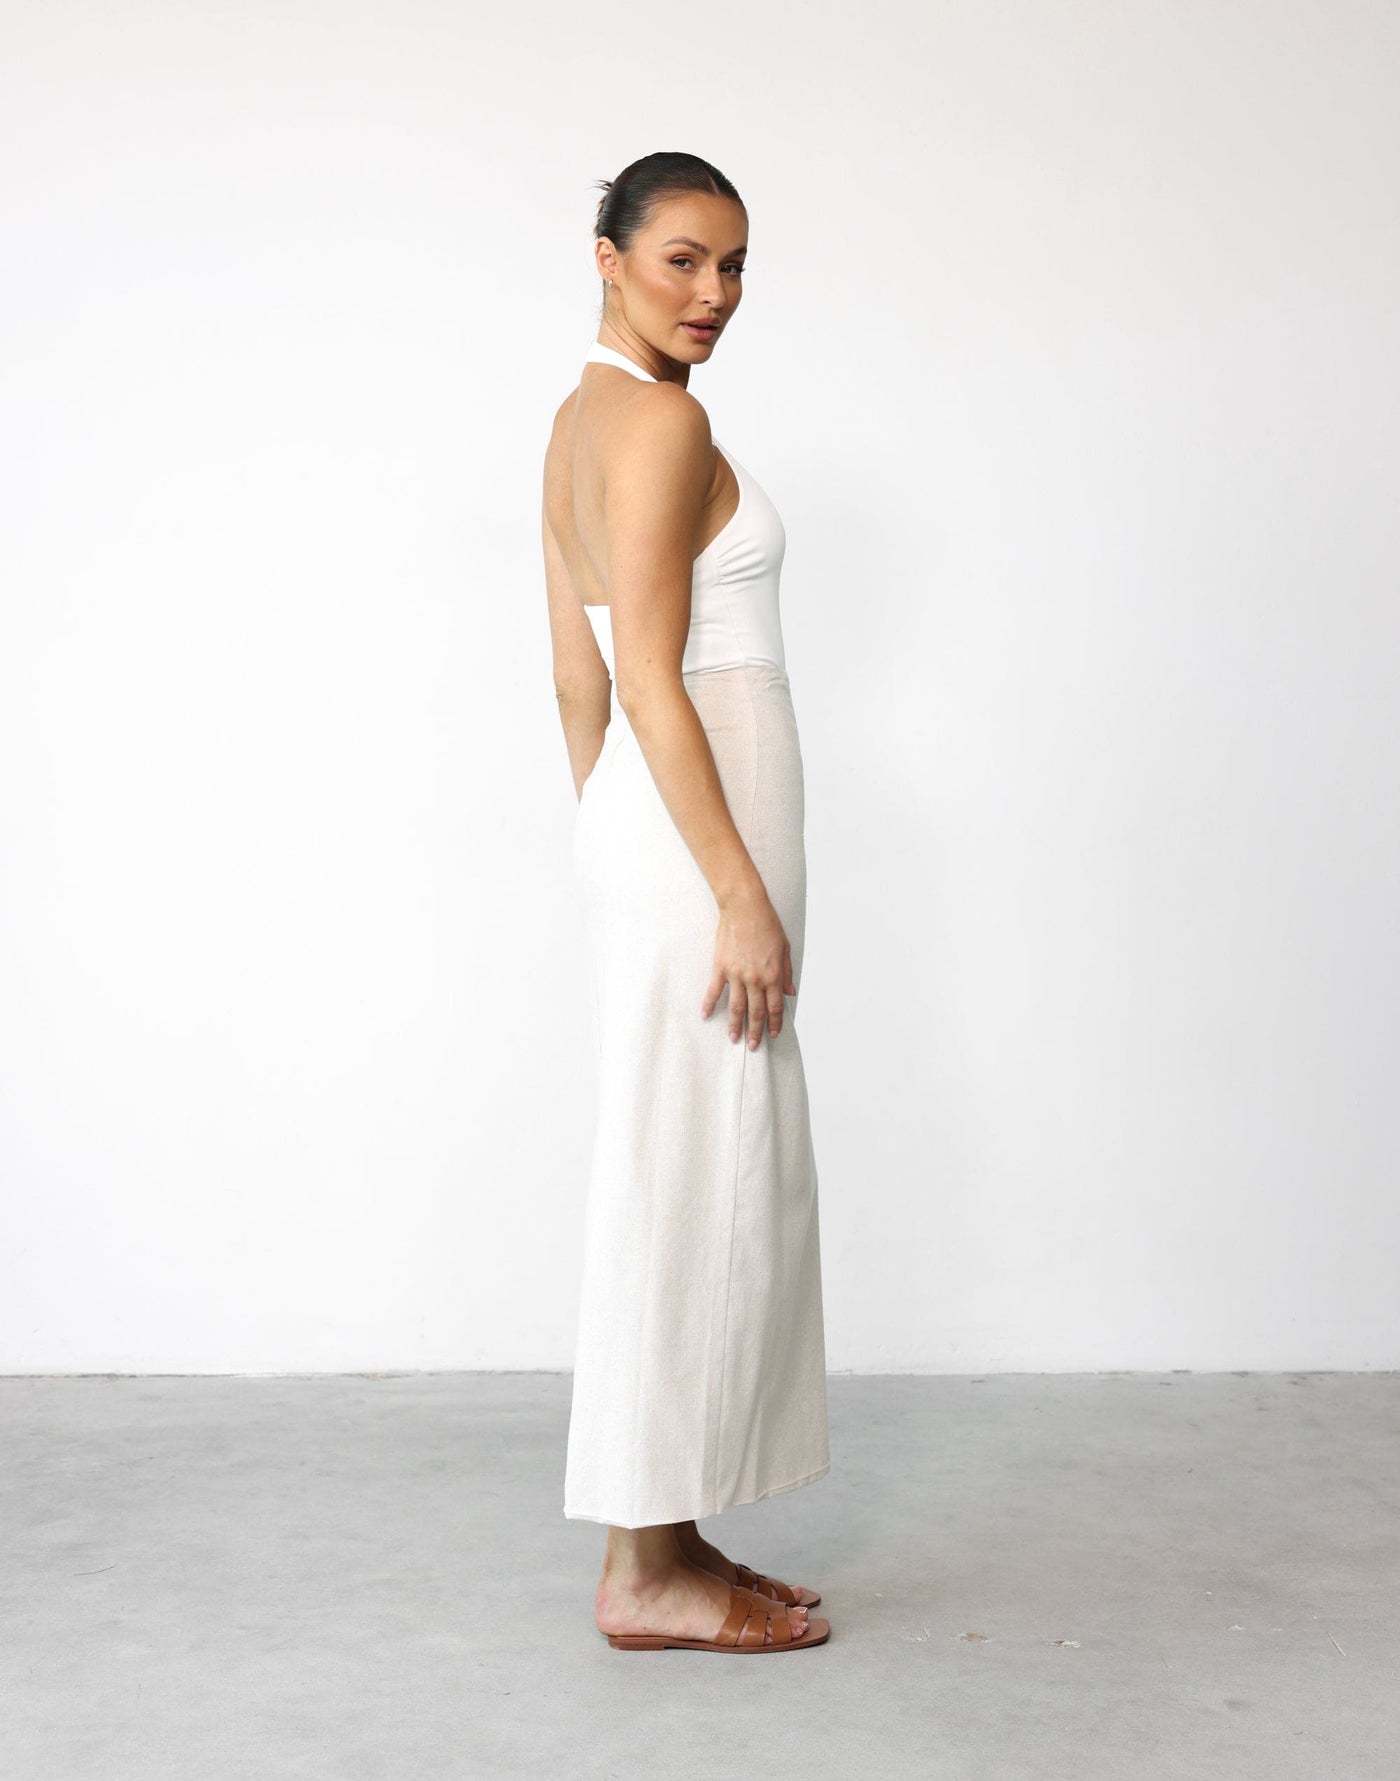 Amira Bodysuit (White) - Low Back Halter Neck Bodysuit - Women's Top - Charcoal Clothing